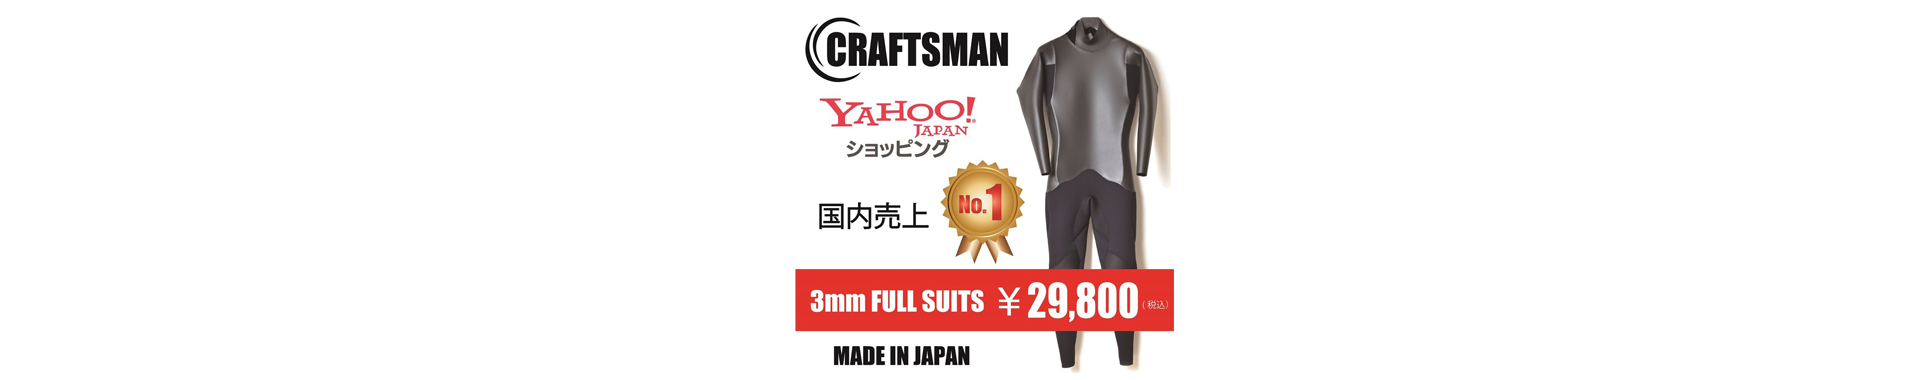 CRAFTSMEN YAHOOショッピング ウェットスーツ